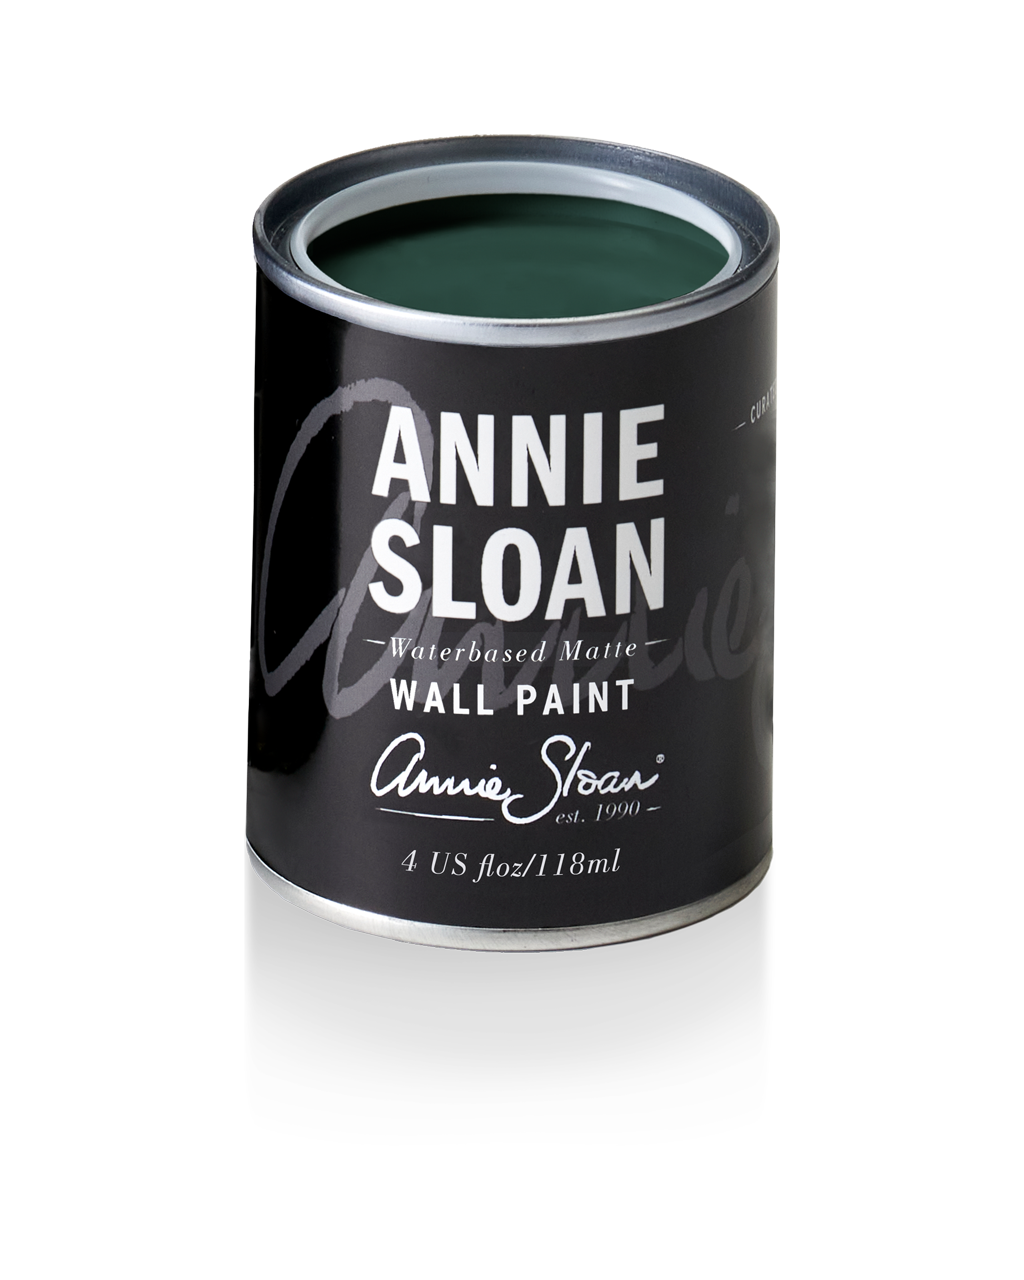 Annie Sloan Wall Paint - Knightsbridge Green